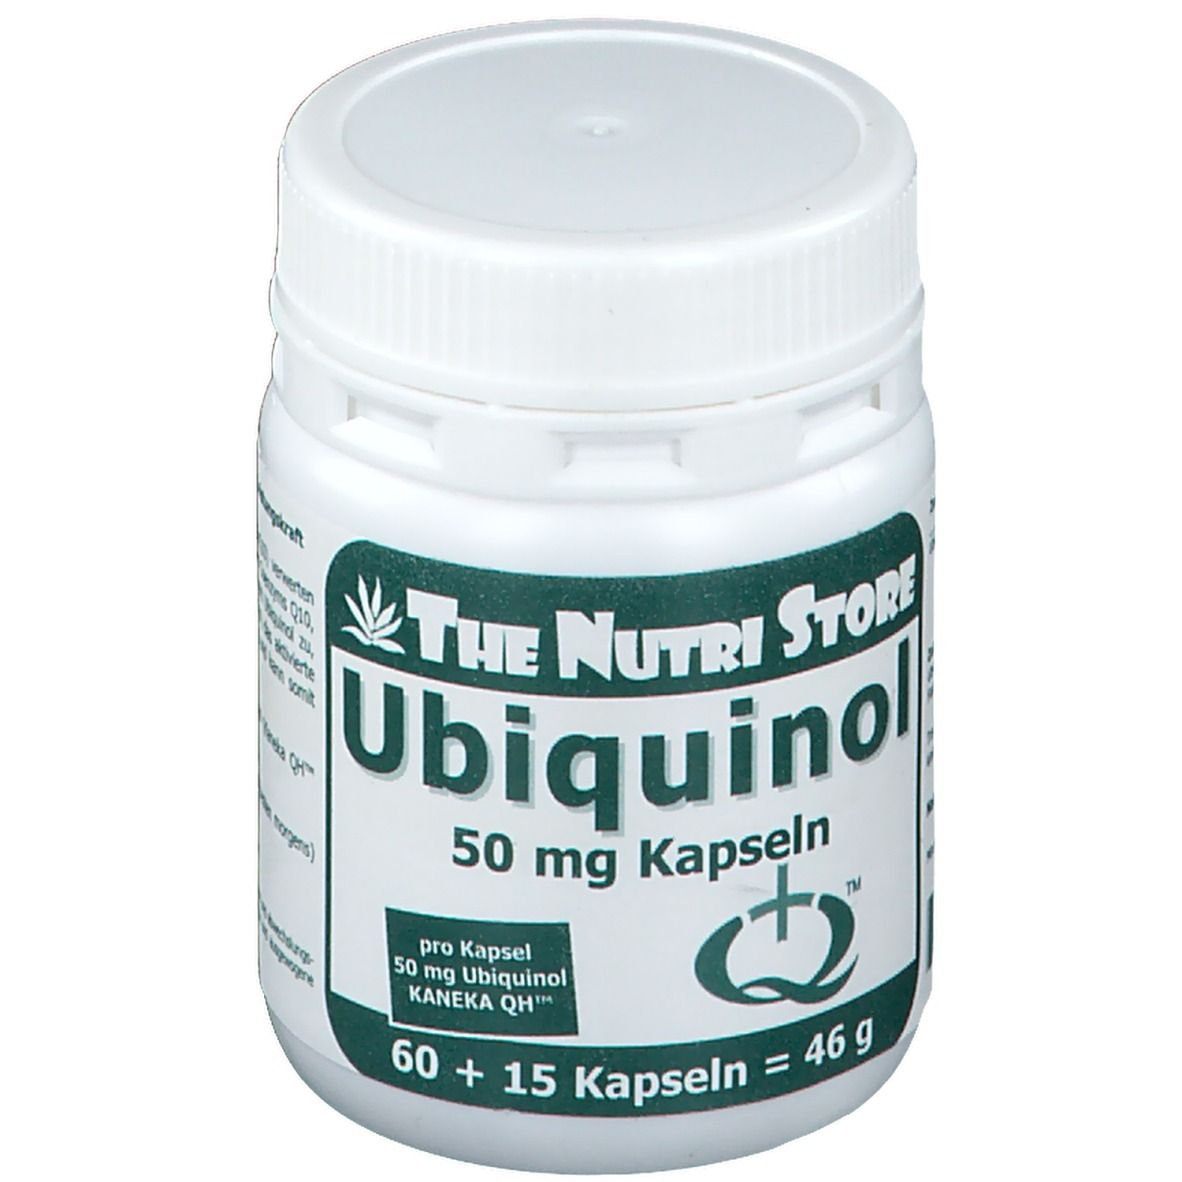 The Nutri Store Ubiquinol 50 mg